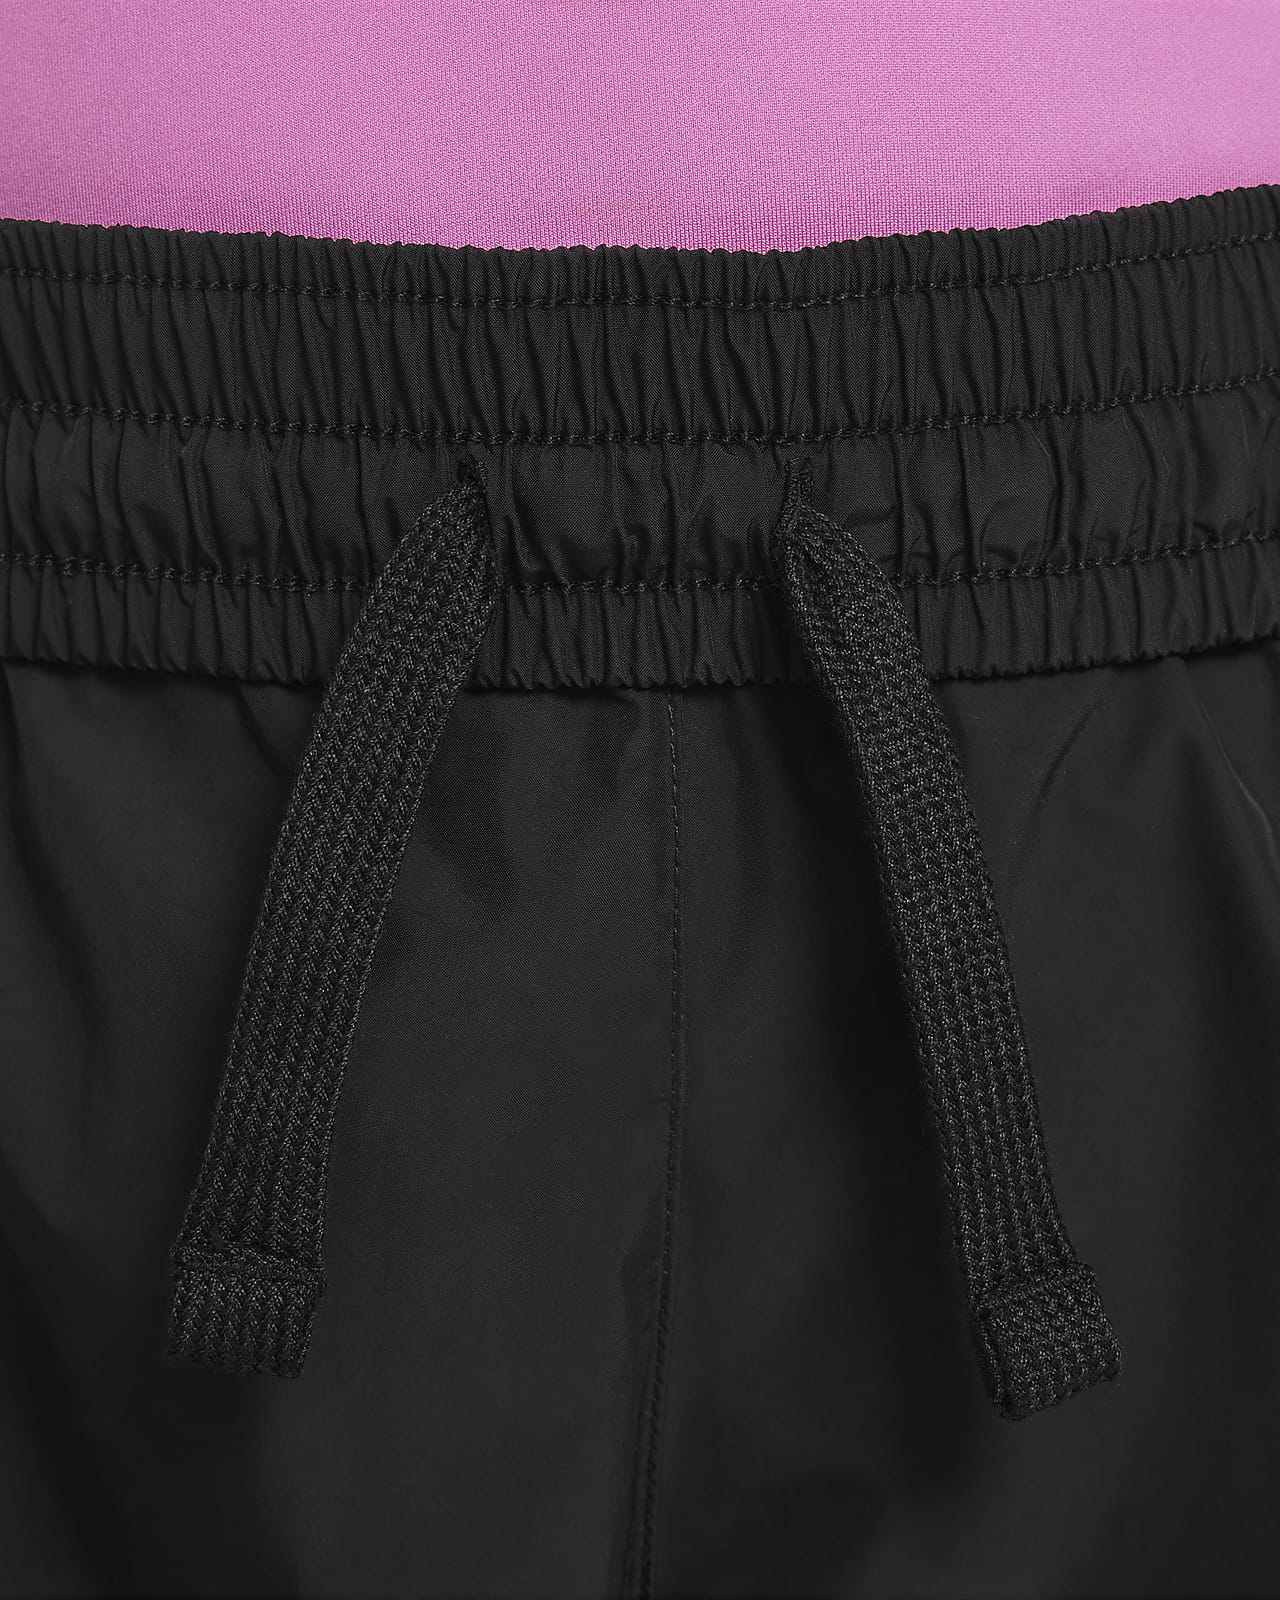 Nike Dri-FIT One Big Kids' (Girls') Woven Training Pants